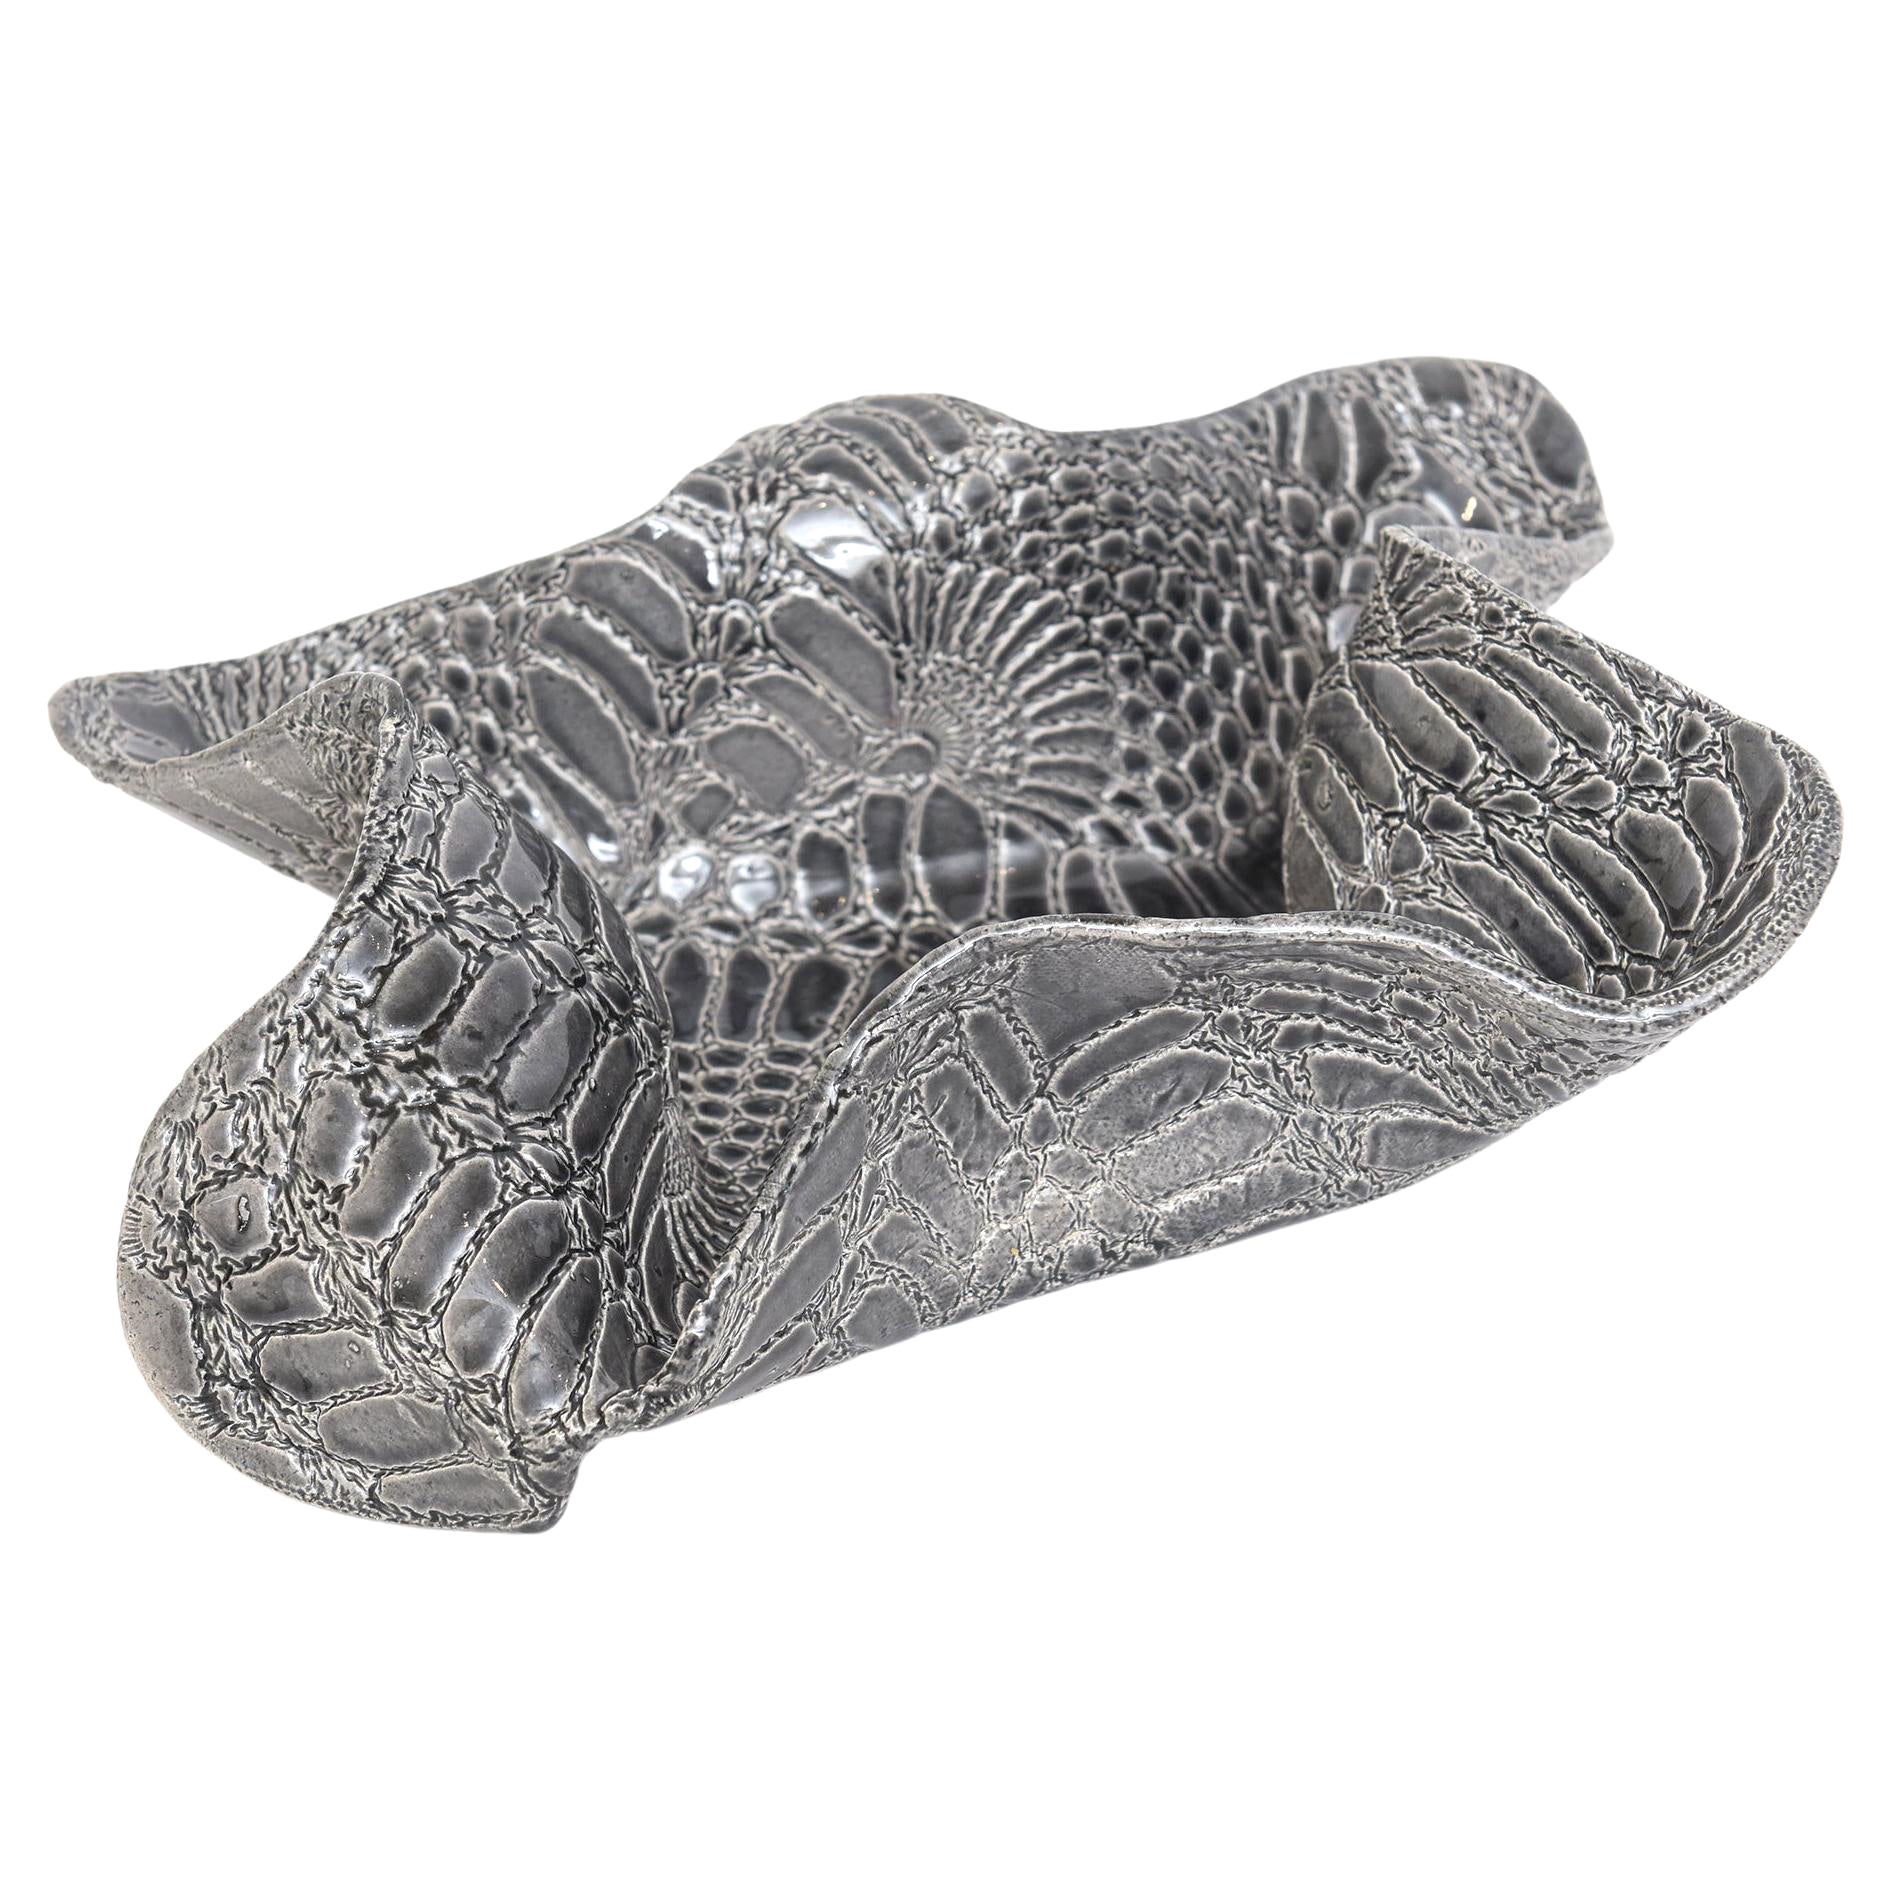 Ceramic Textural Snakeskin Pattern Grey White Biomorphic Sculptural Bowl For Sale